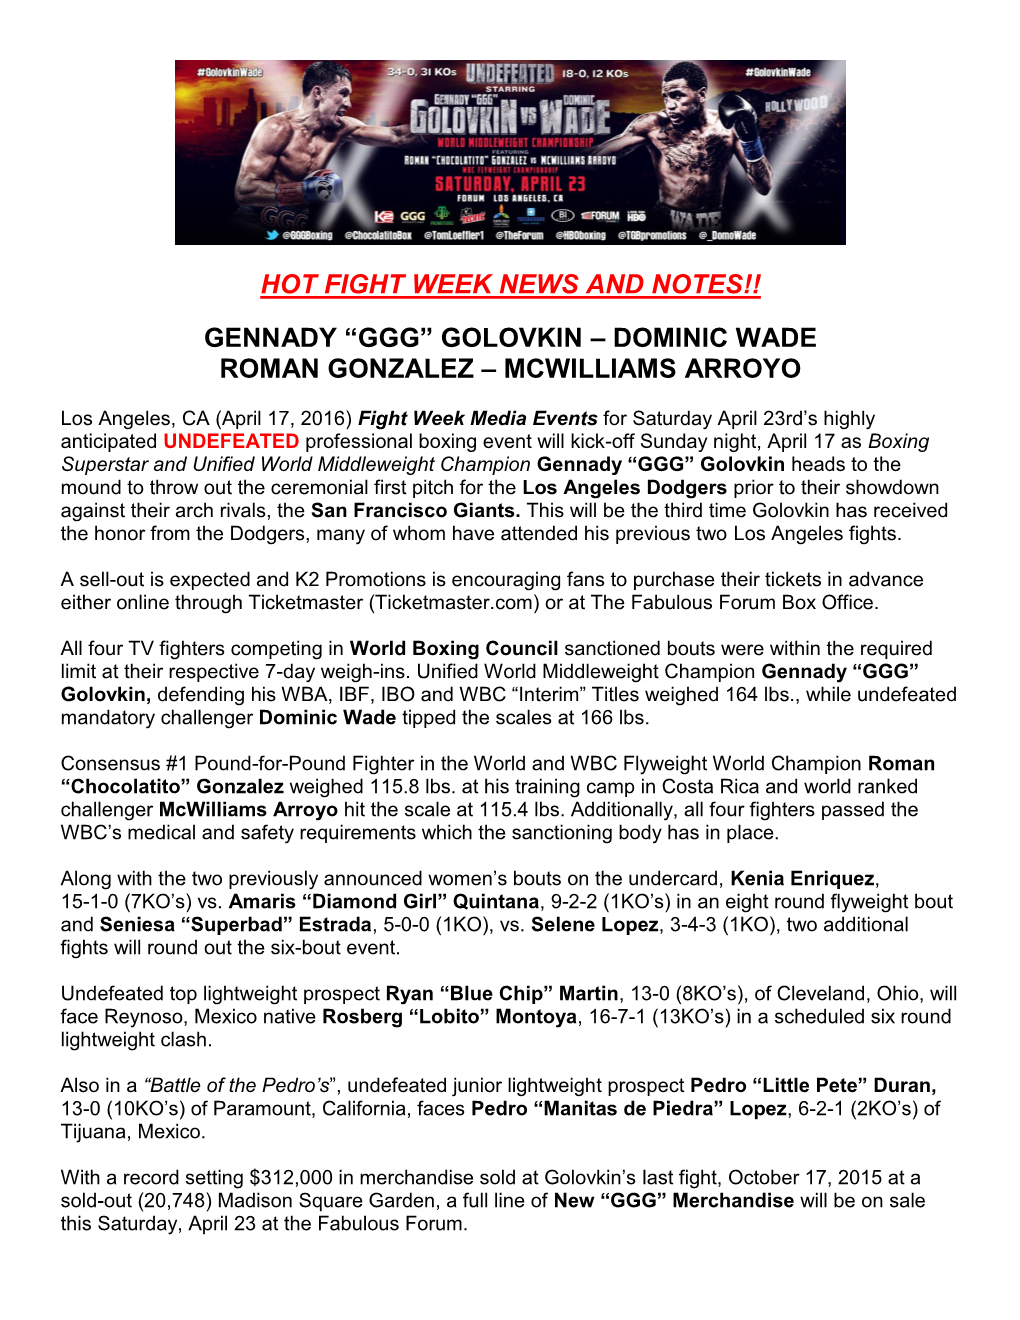 “Ggg” Golovkin – Dominic Wade Roman Gonzalez – Mcwilliams Arroyo